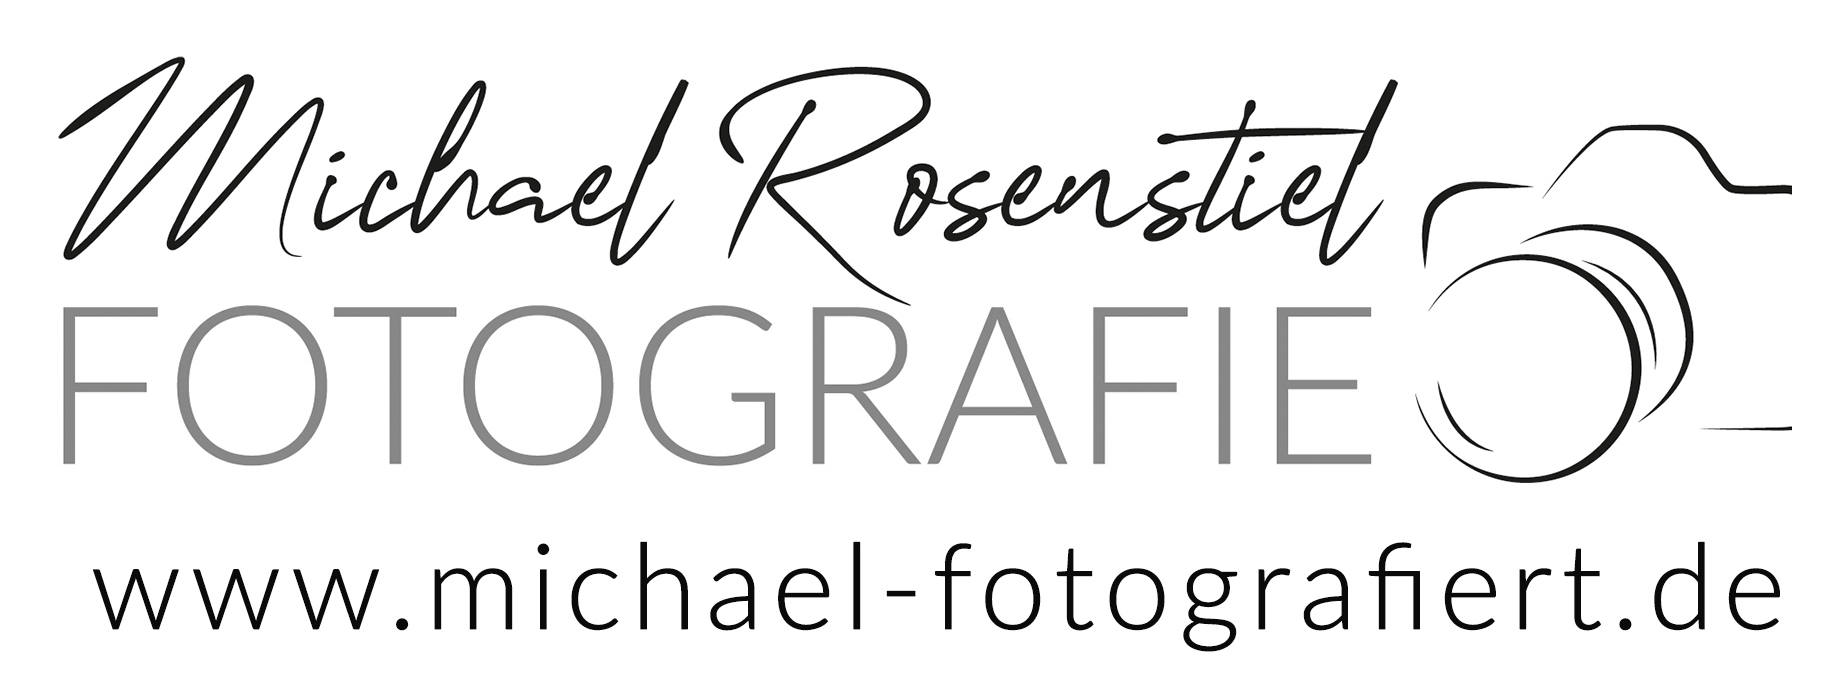 Michael Rosenstiel FOTOGRAFIE